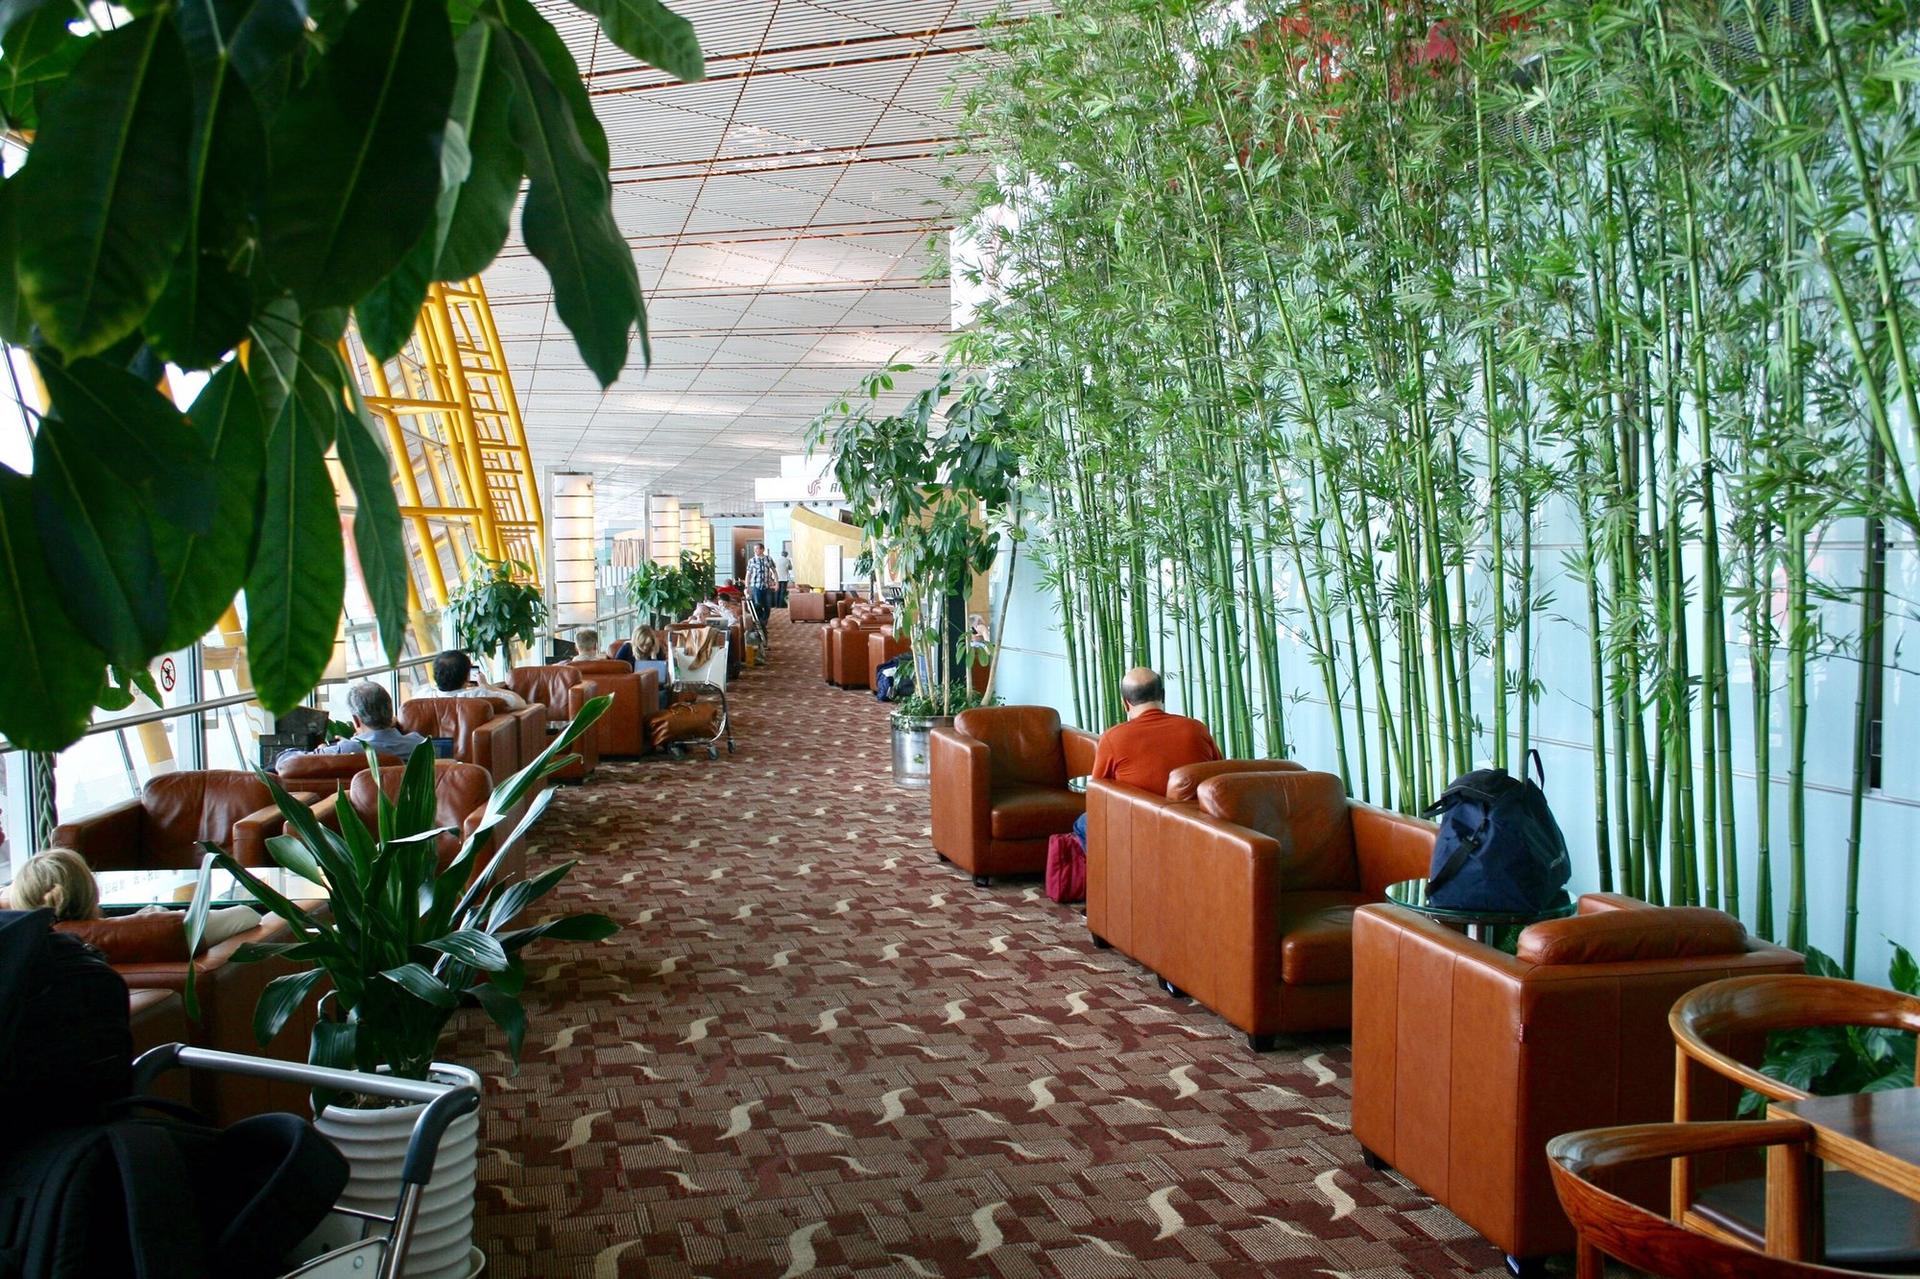 Air China International Business Class Lounge image 1 of 12